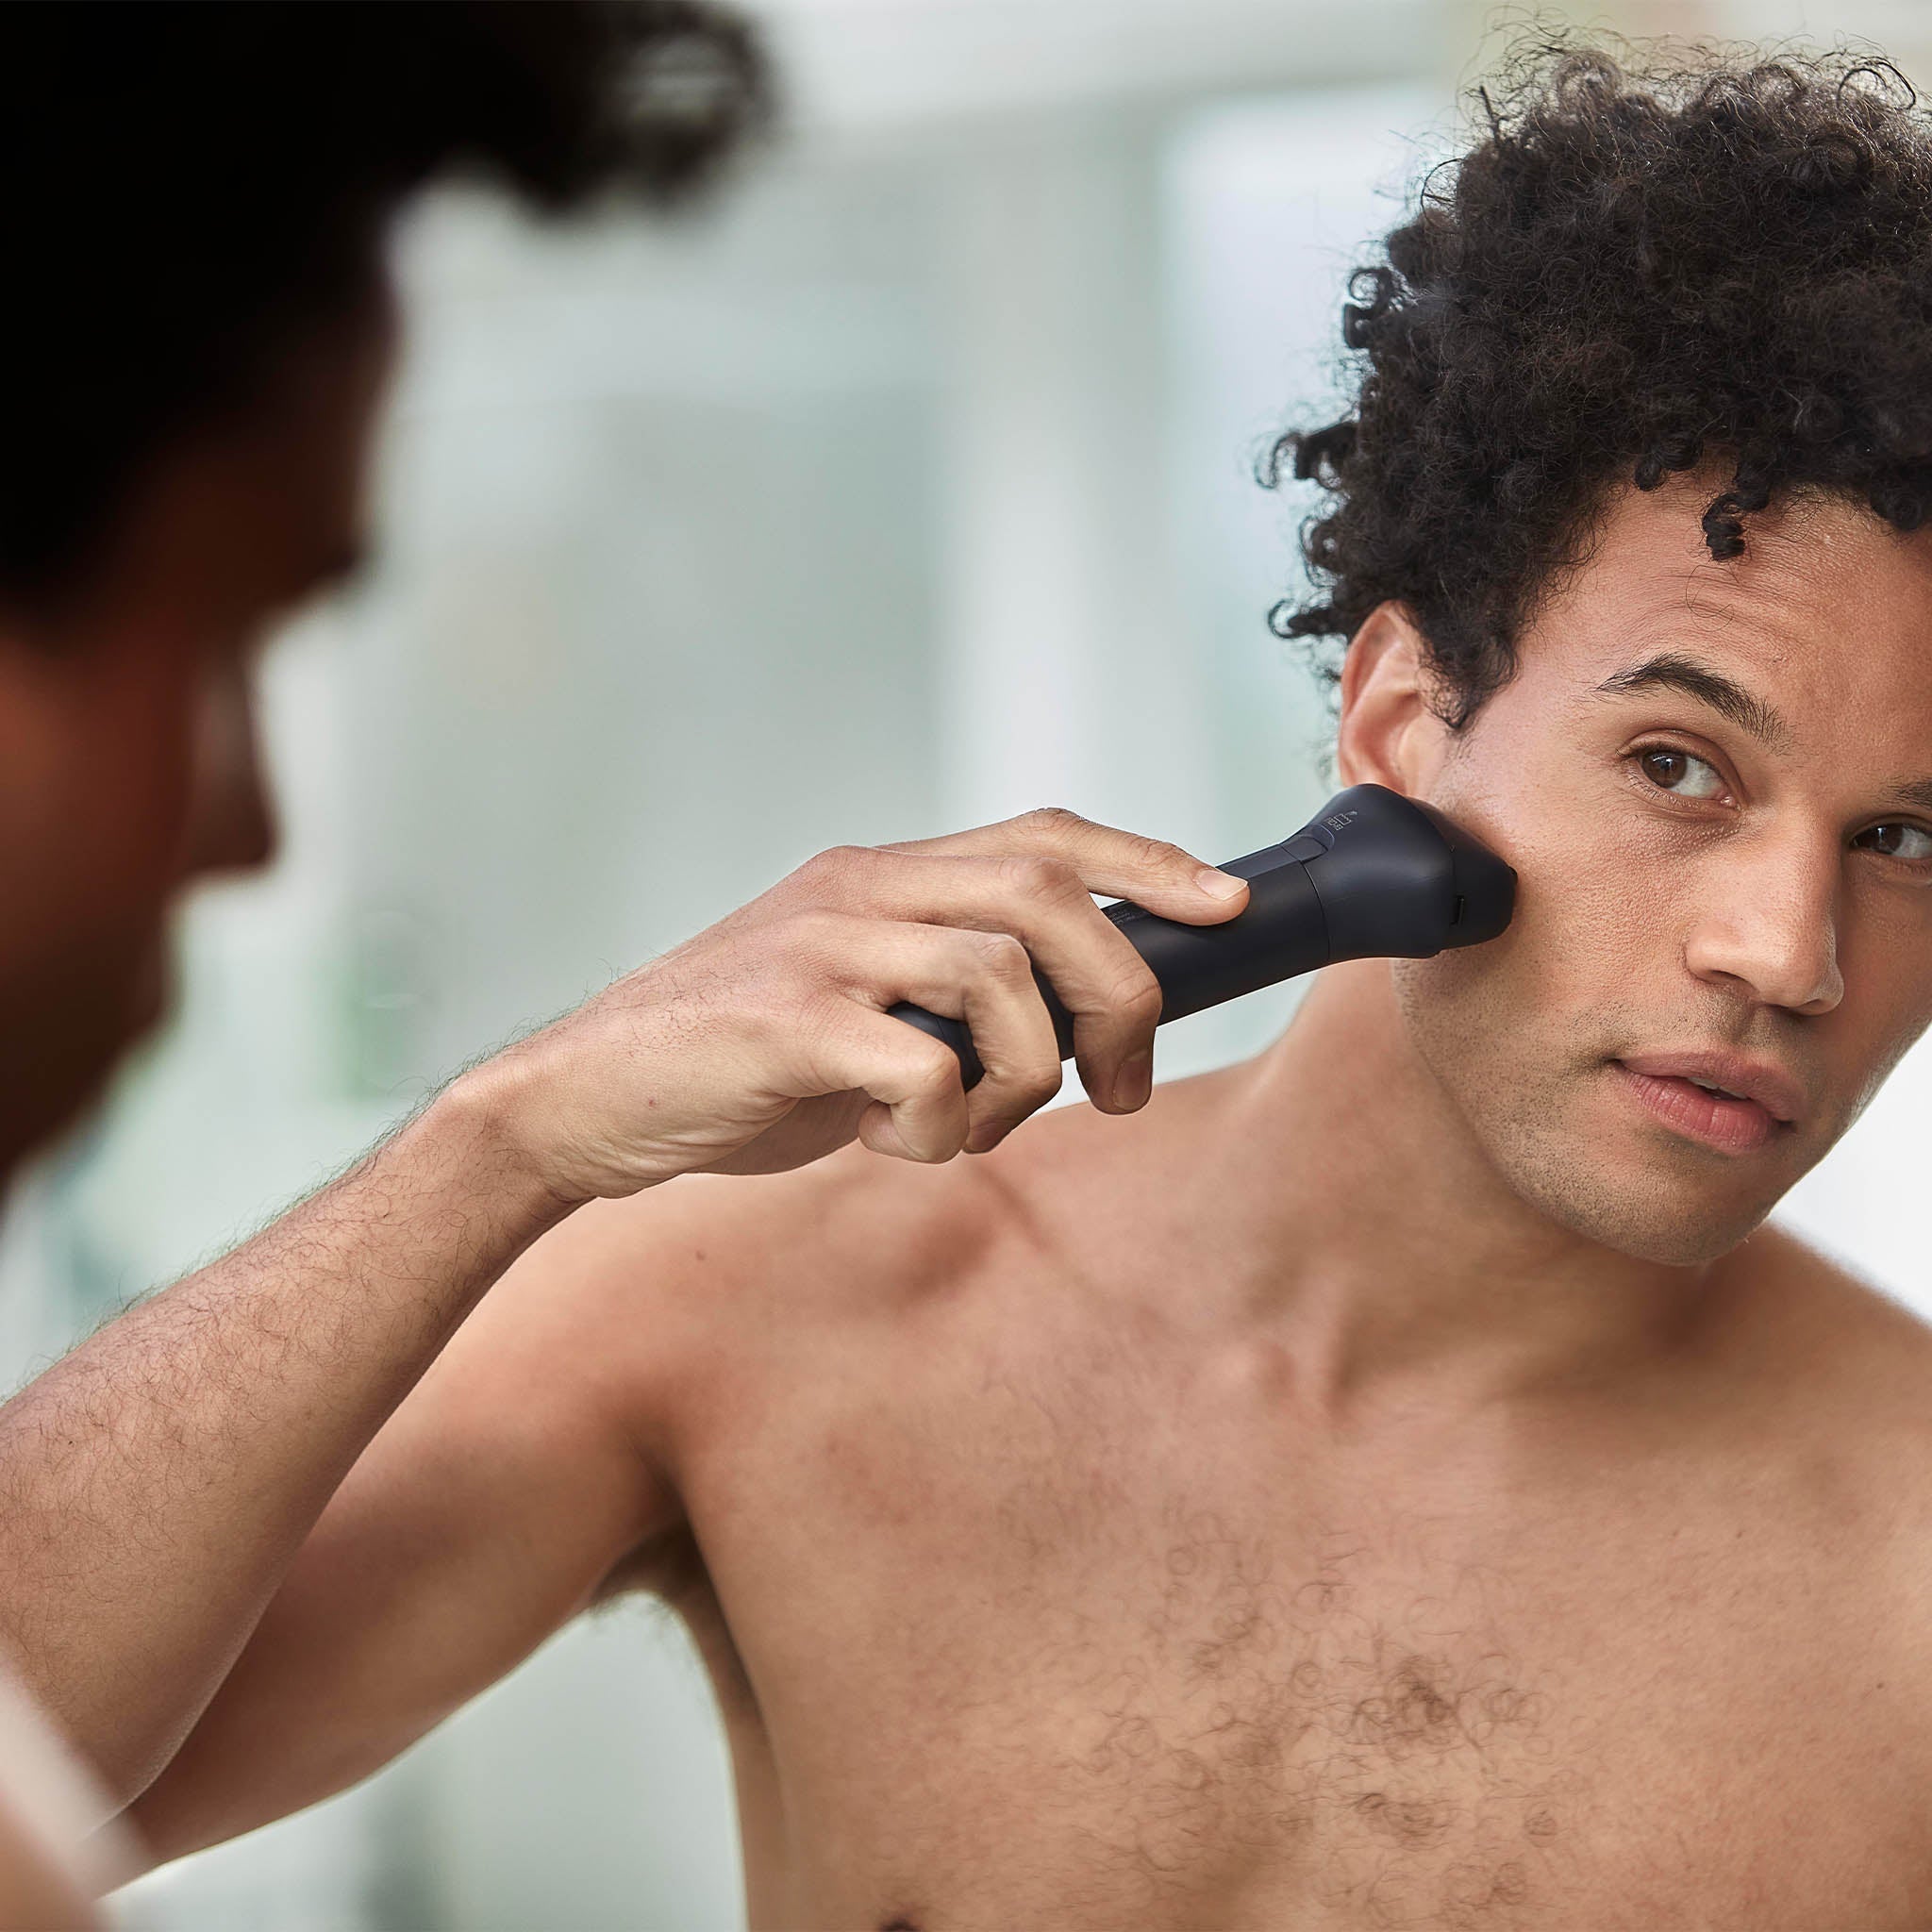 Panasonic España - ¿Estás pensando en comprar una afeitadora, un irrigador  dental, un secador de pelo… o cualquier producto de personal care? 📣  Entonces estás de suerte, porque organizamos un sorteo semanal